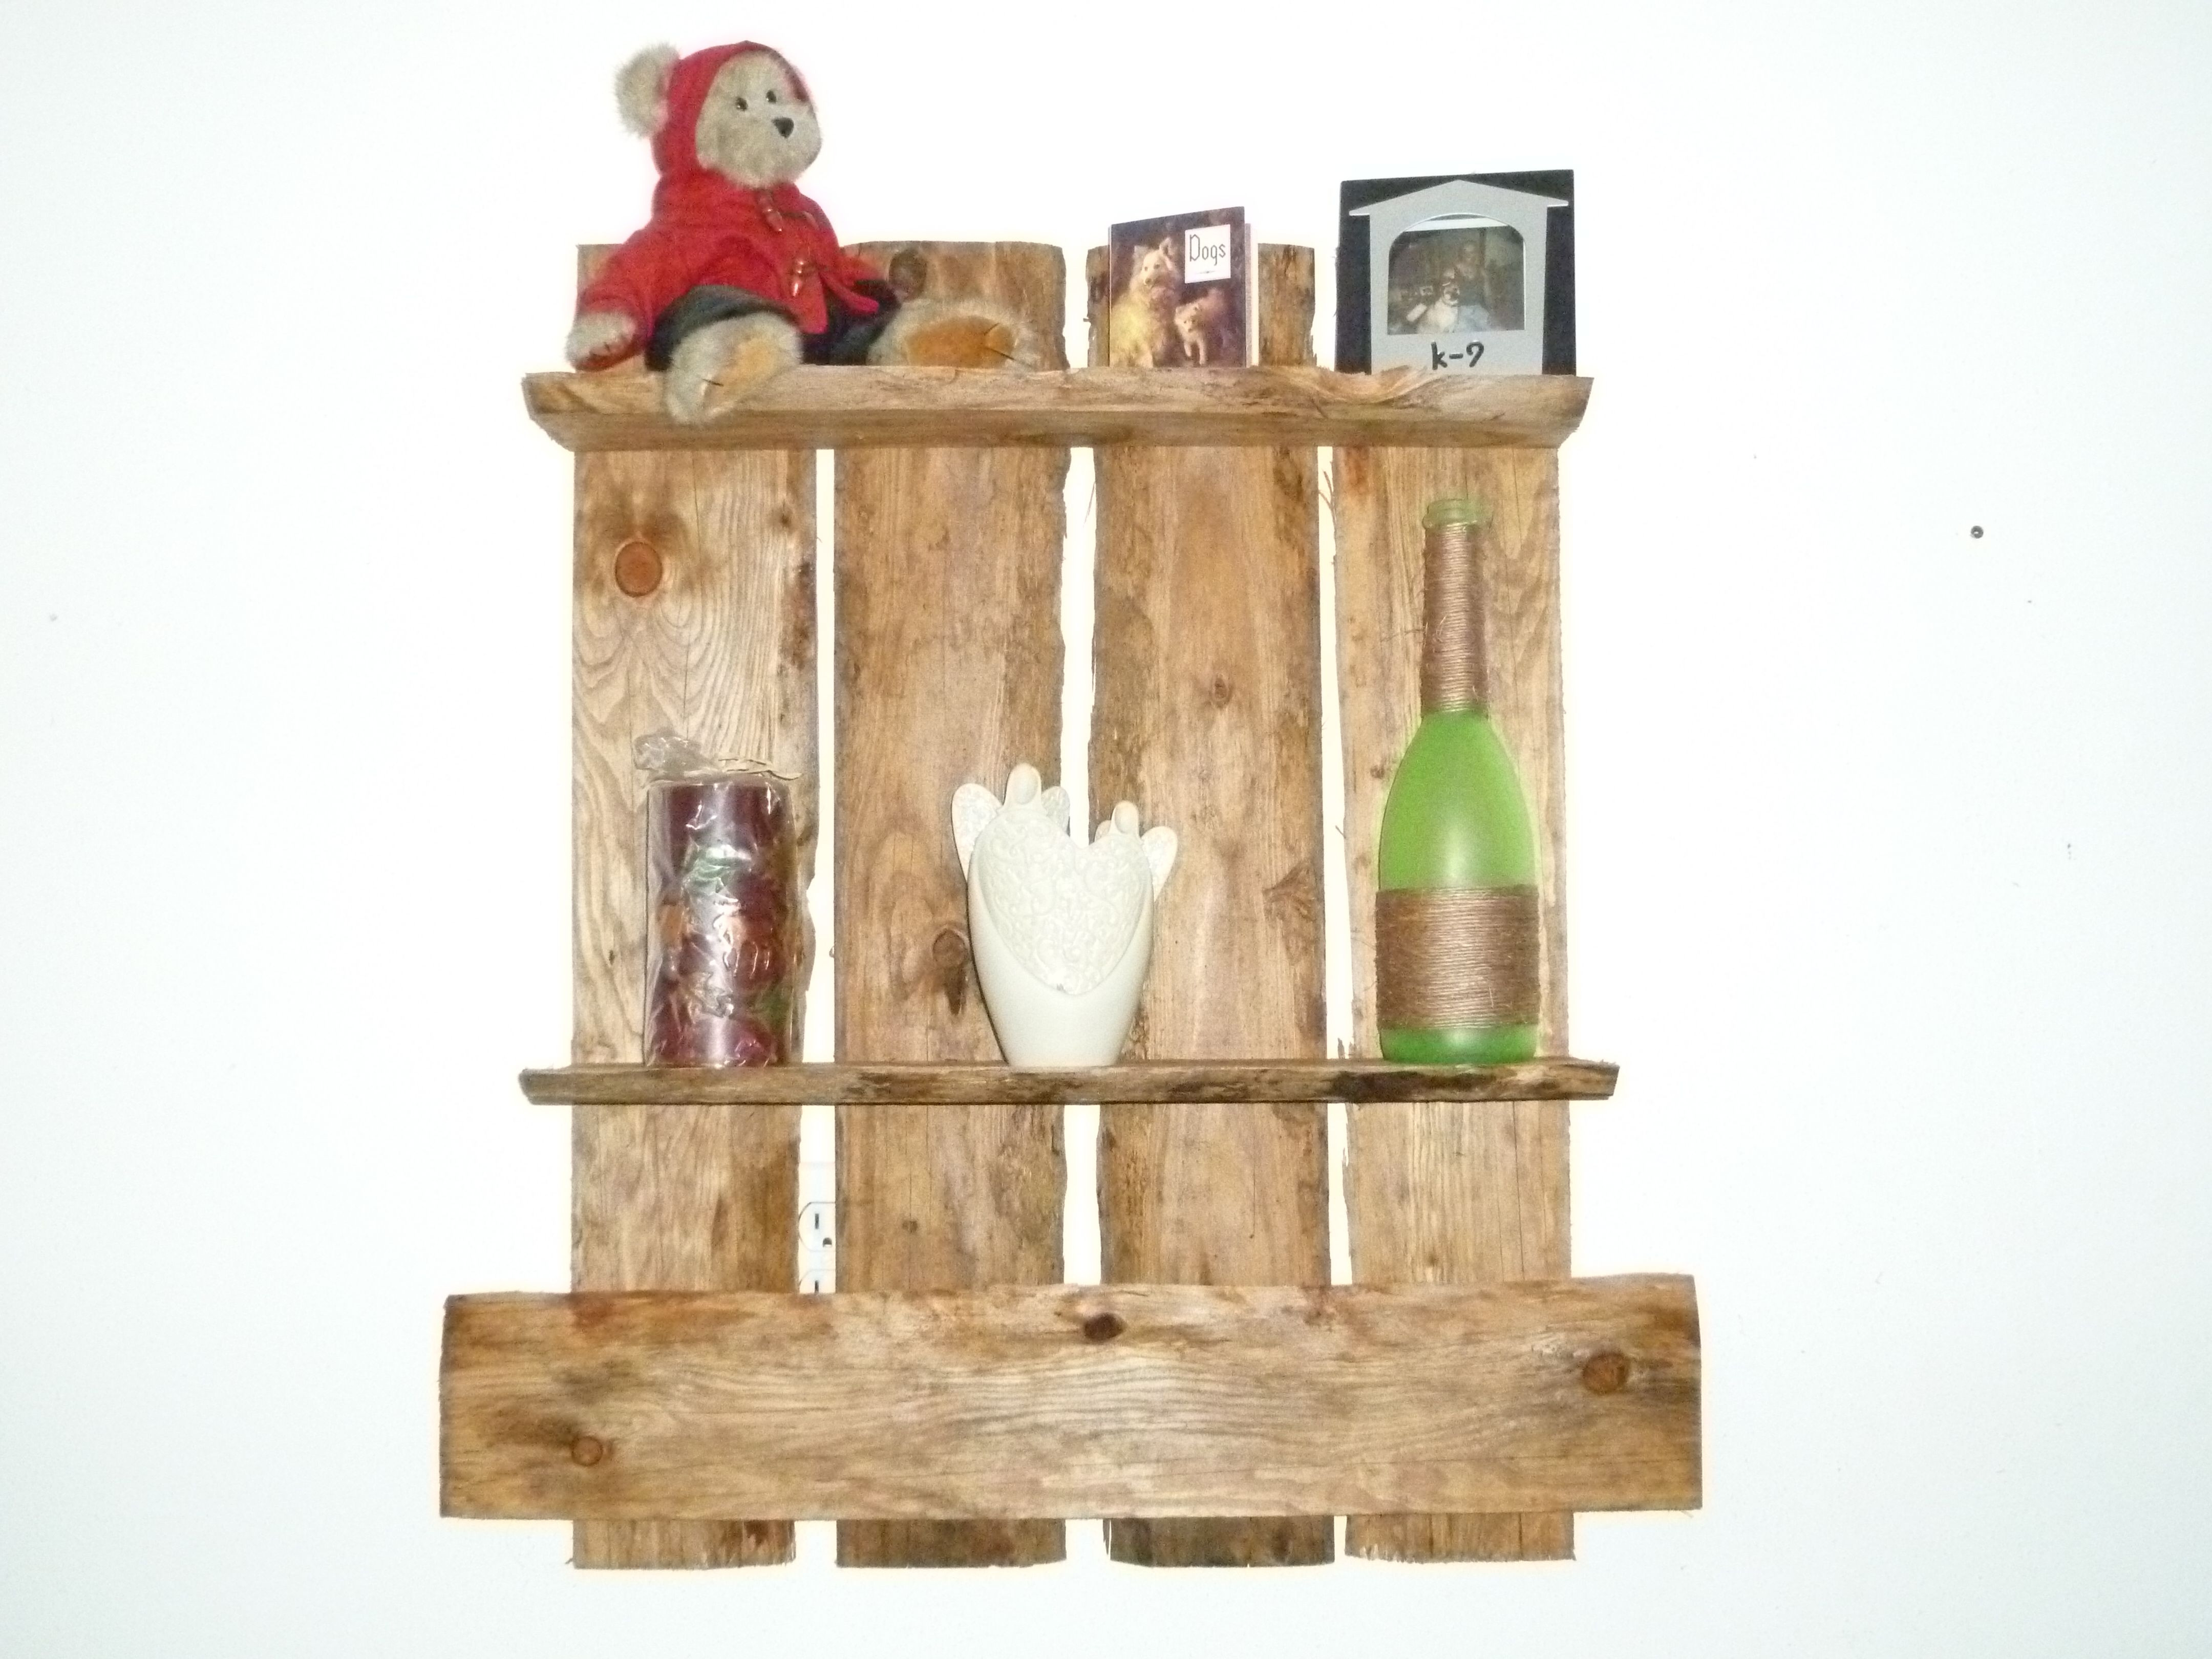 Best ideas about DIY Reclaimed Wood Shelf
. Save or Pin DIY reclaimed wood shelf Now.